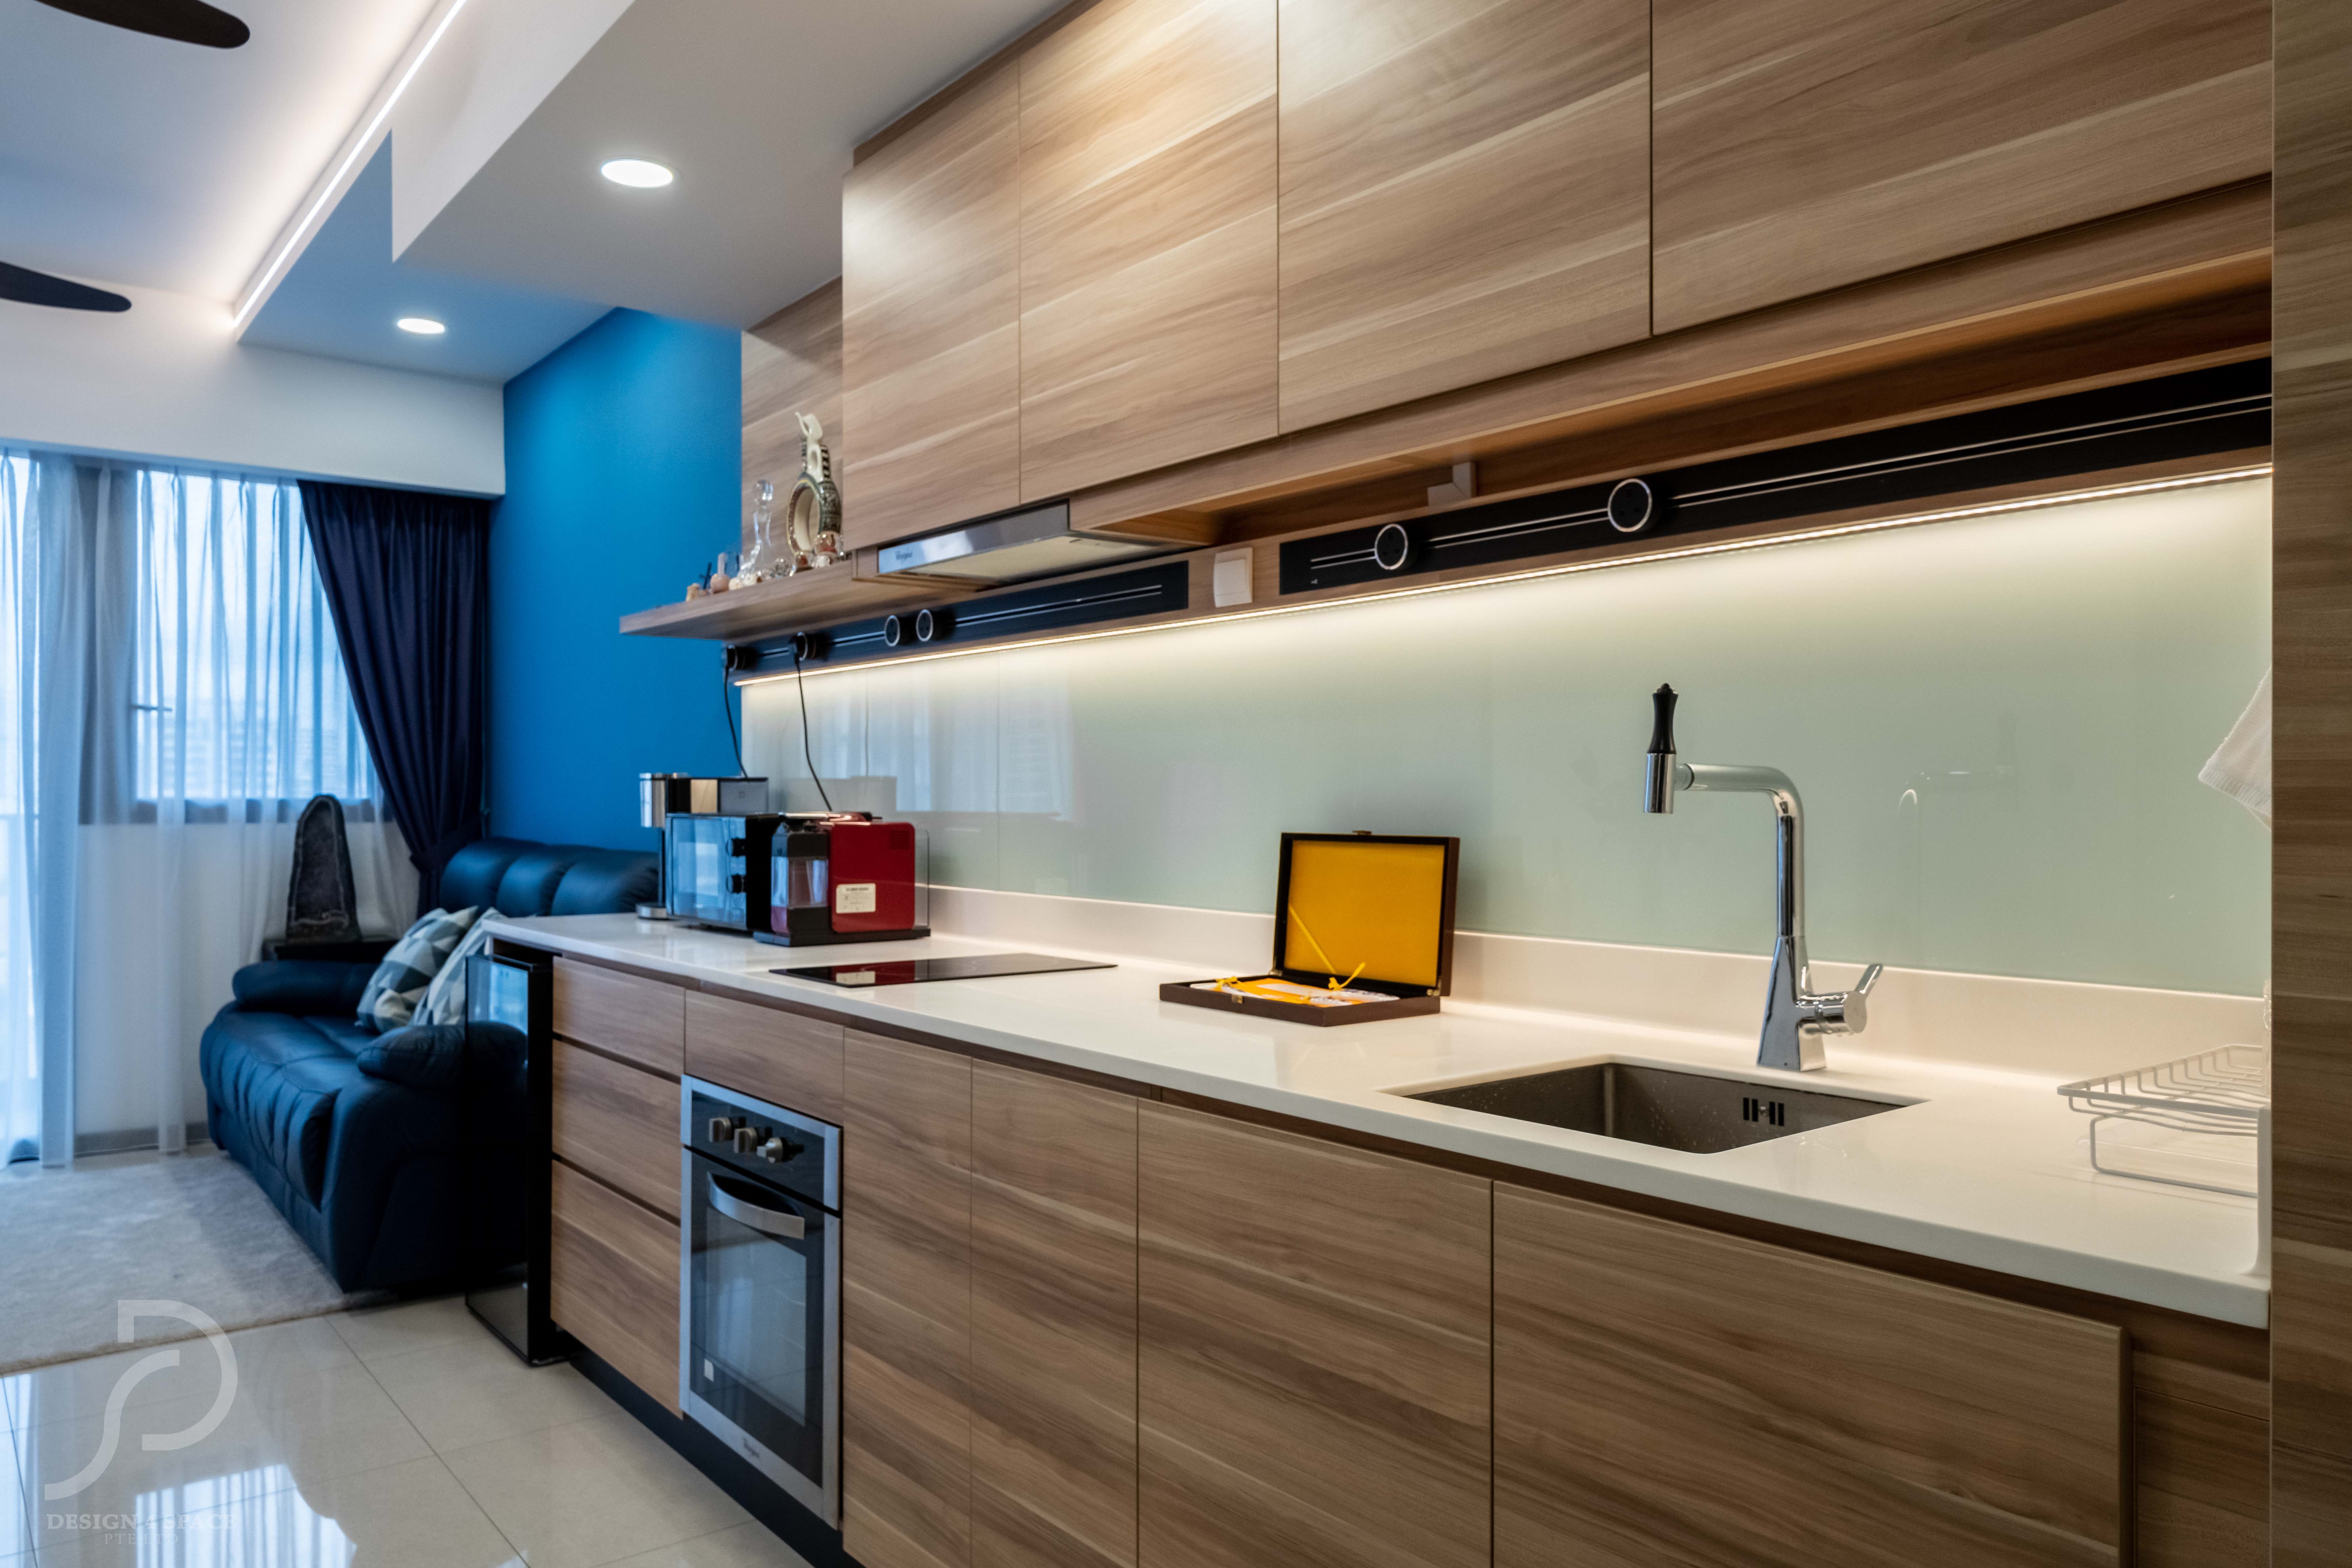 Contemporary, Others Design - Kitchen - HDB Studio Apartment - Design by Design 4 Space Pte Ltd